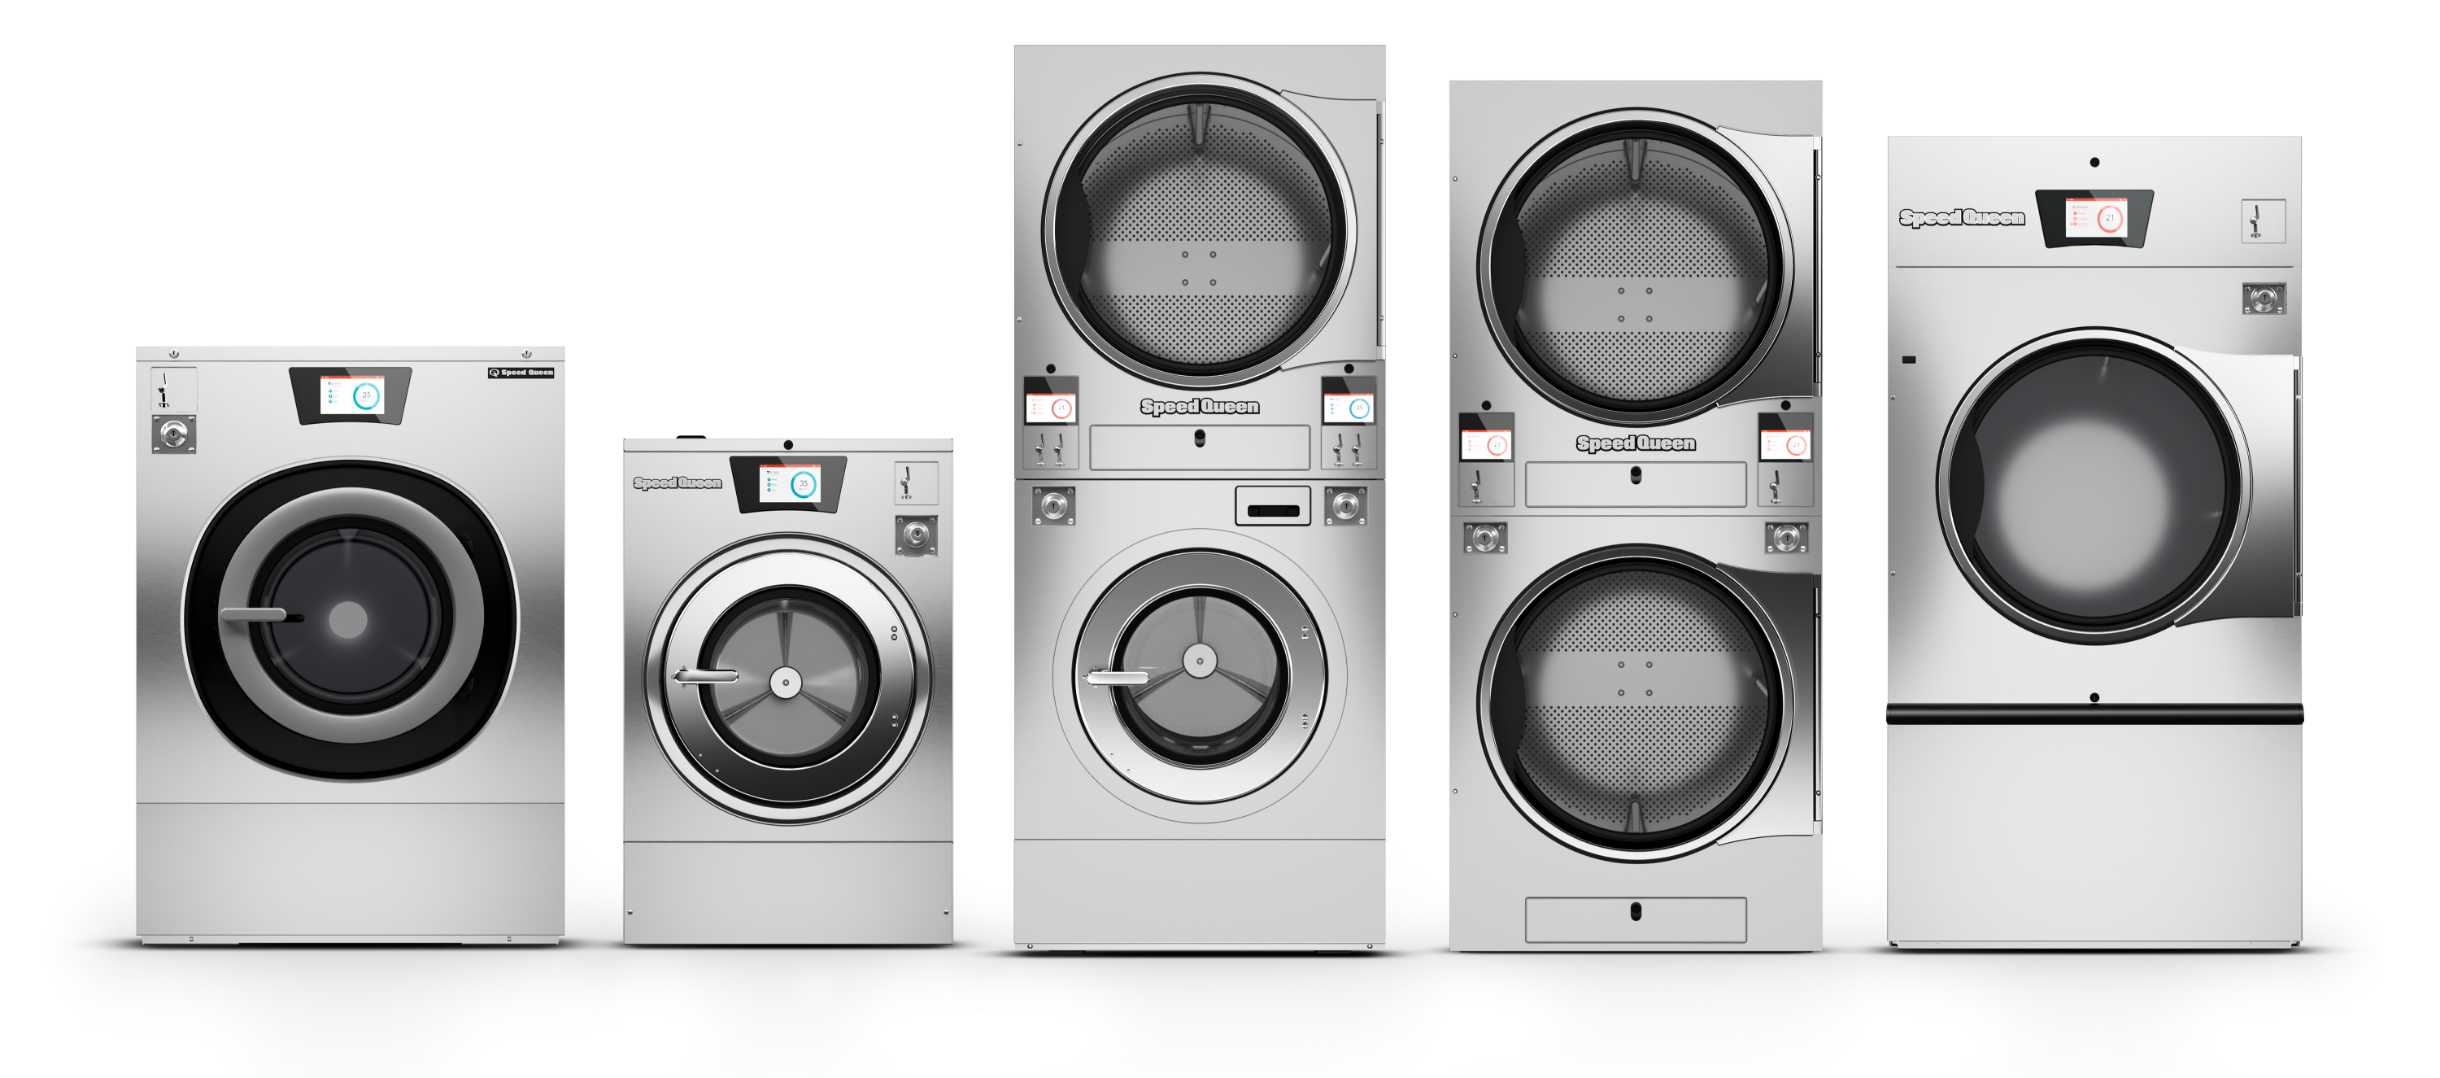 Laundromat Equipment - Coin Laundry Machines